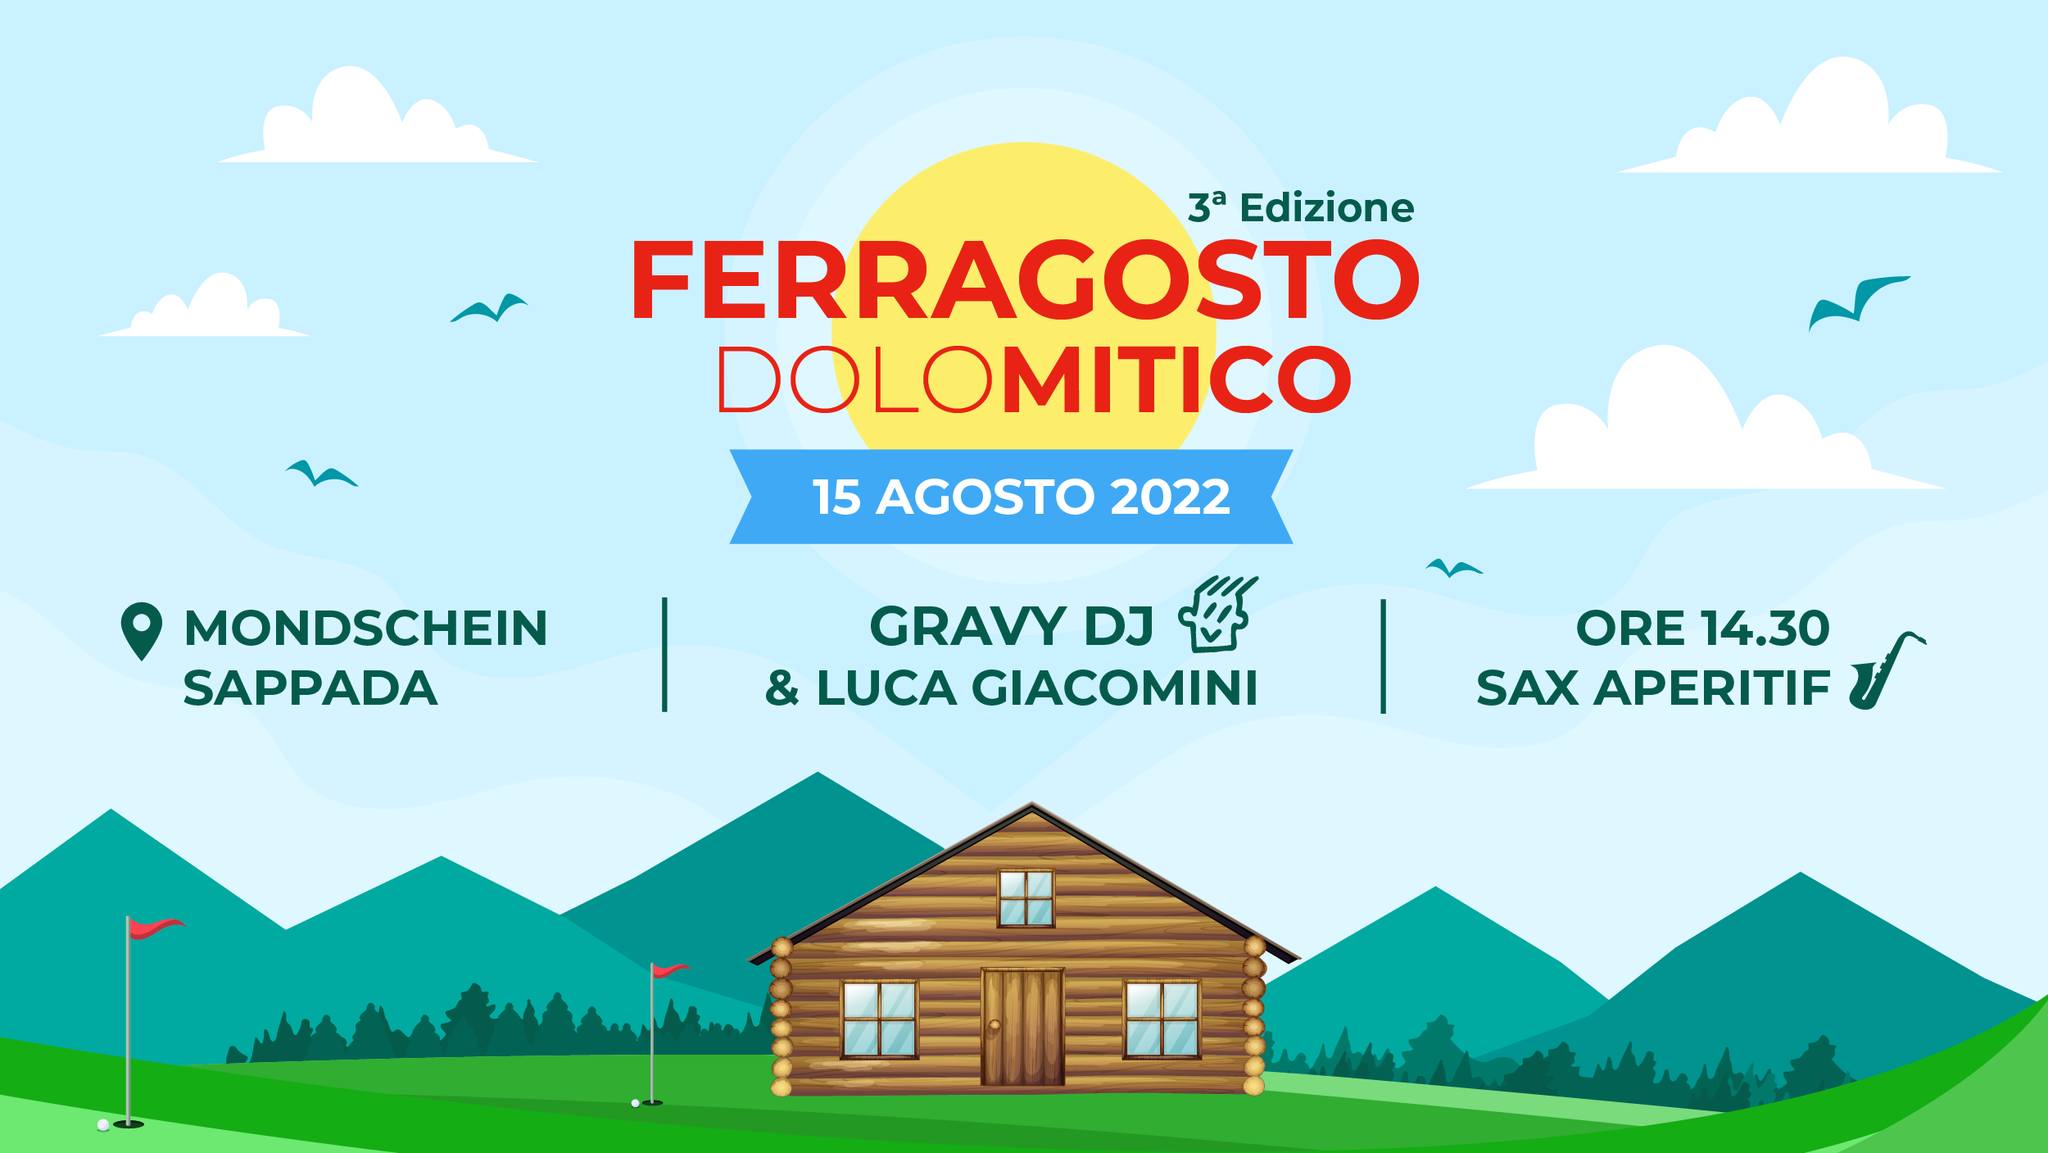 FERRAGOSTO DoloMITICO, GRAVY DJ & Luca Giacomini